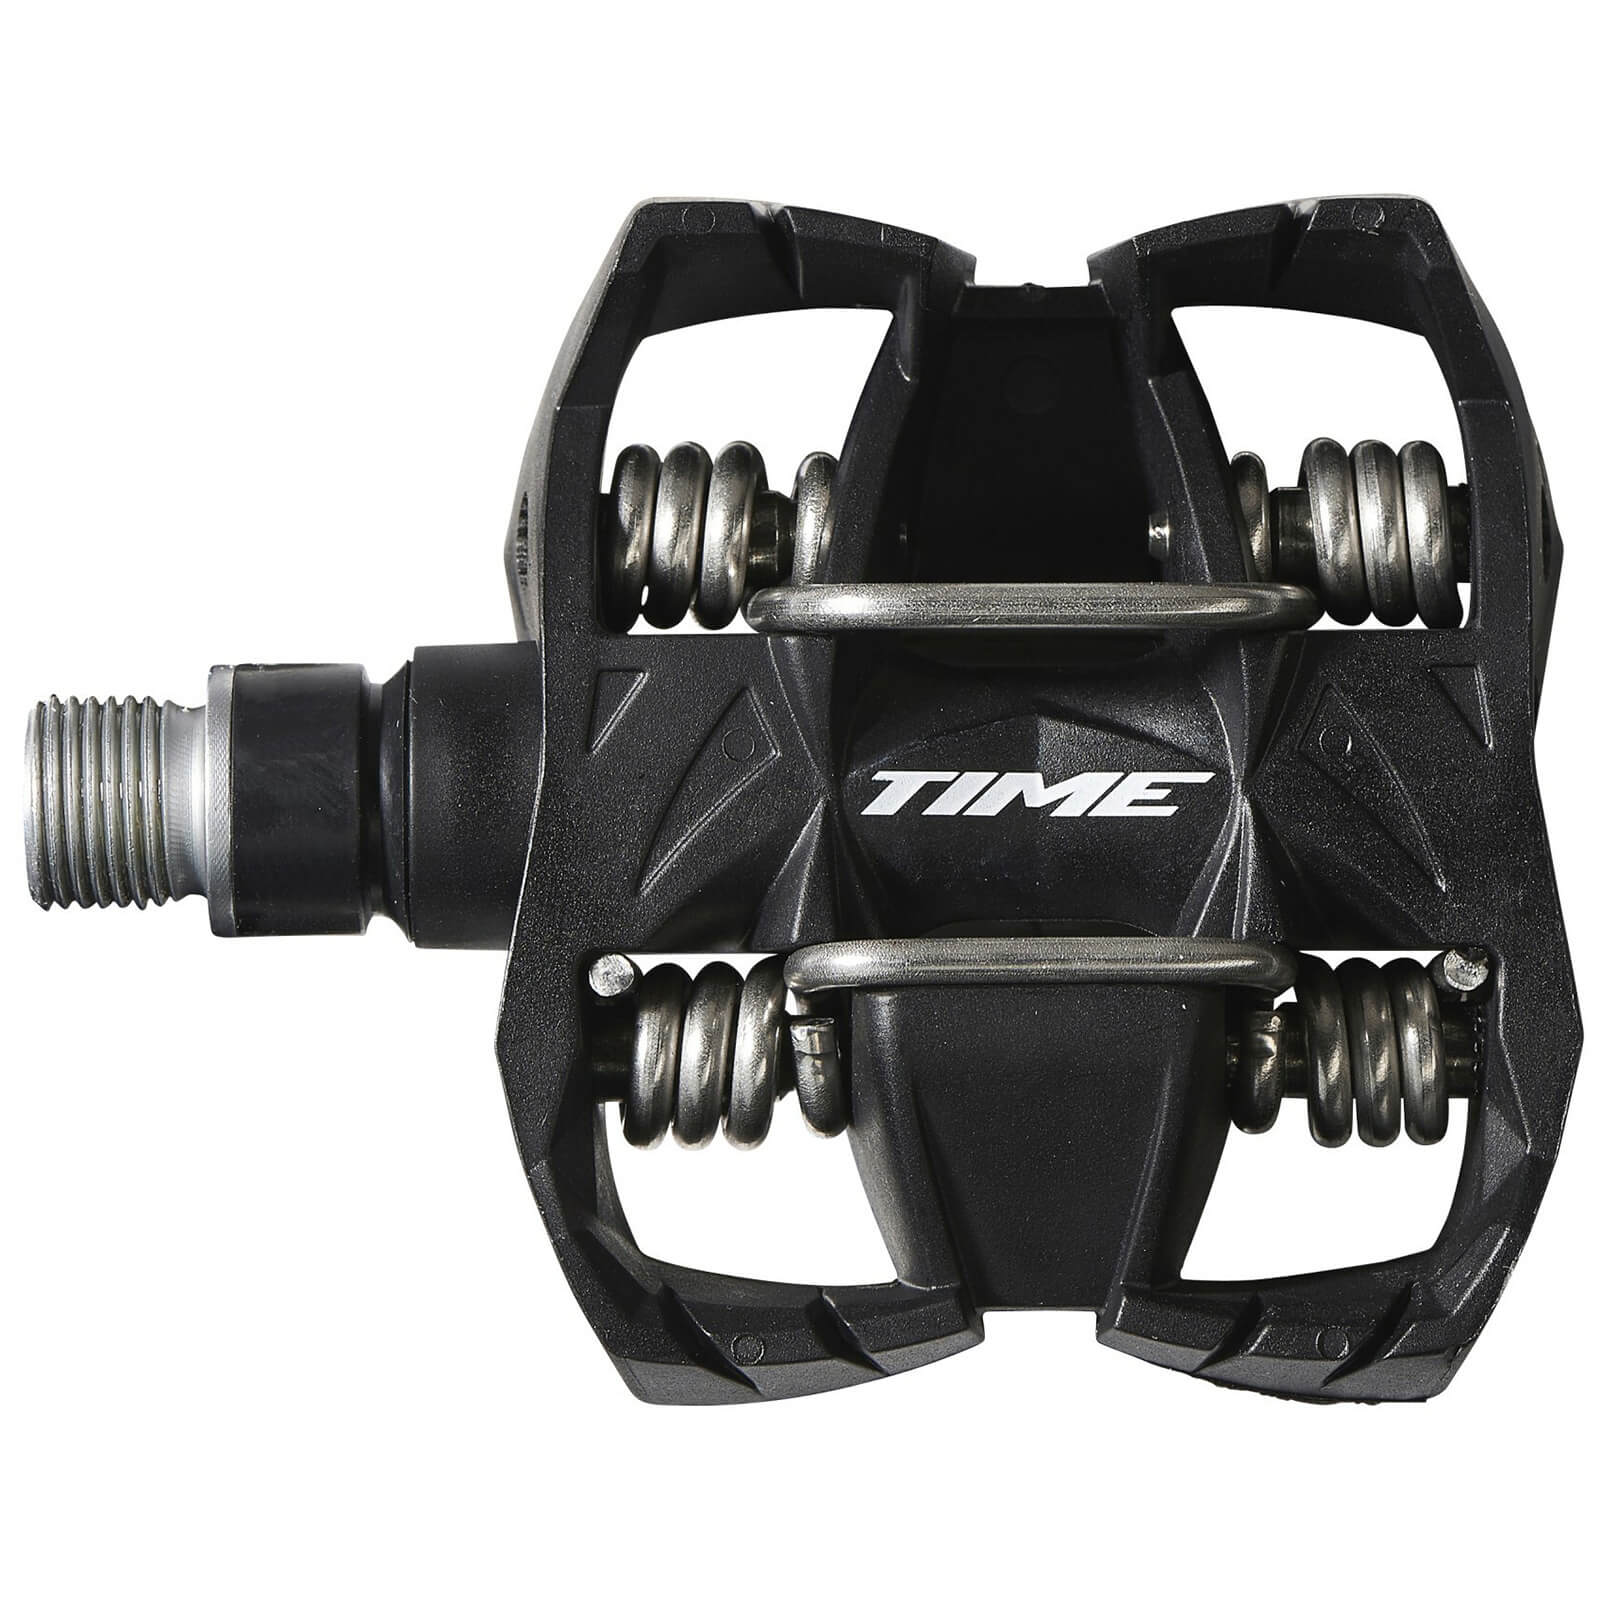 Time ATAC MX 4 Enduro Pedals